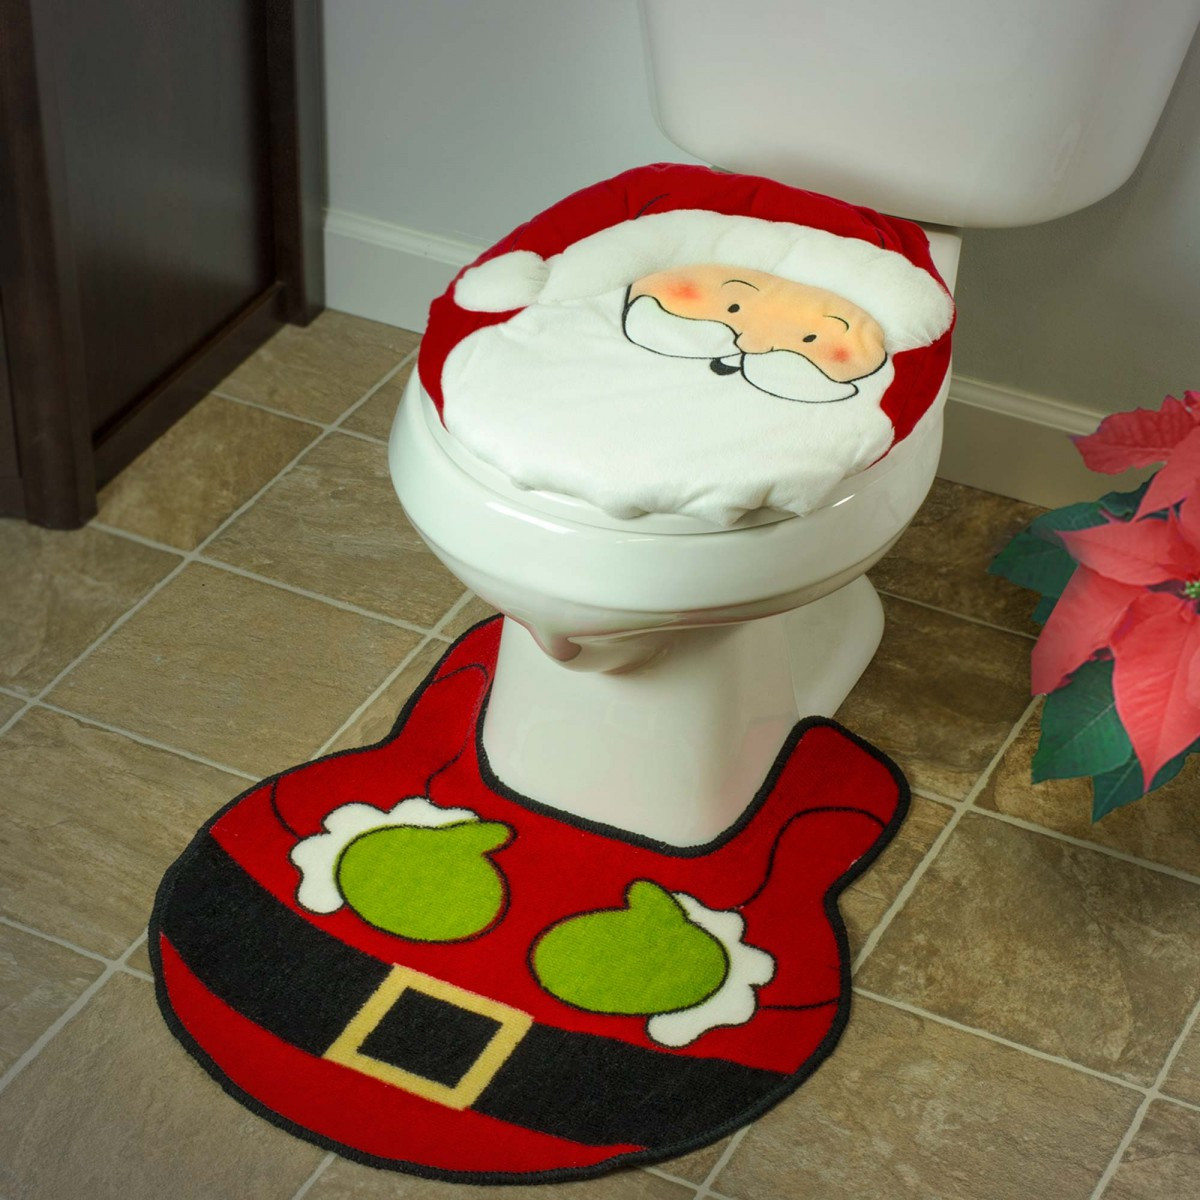 Christmas Toilet Seat
 Beatrice Santa Claus Christmas Holiday Toilet Seat Cover